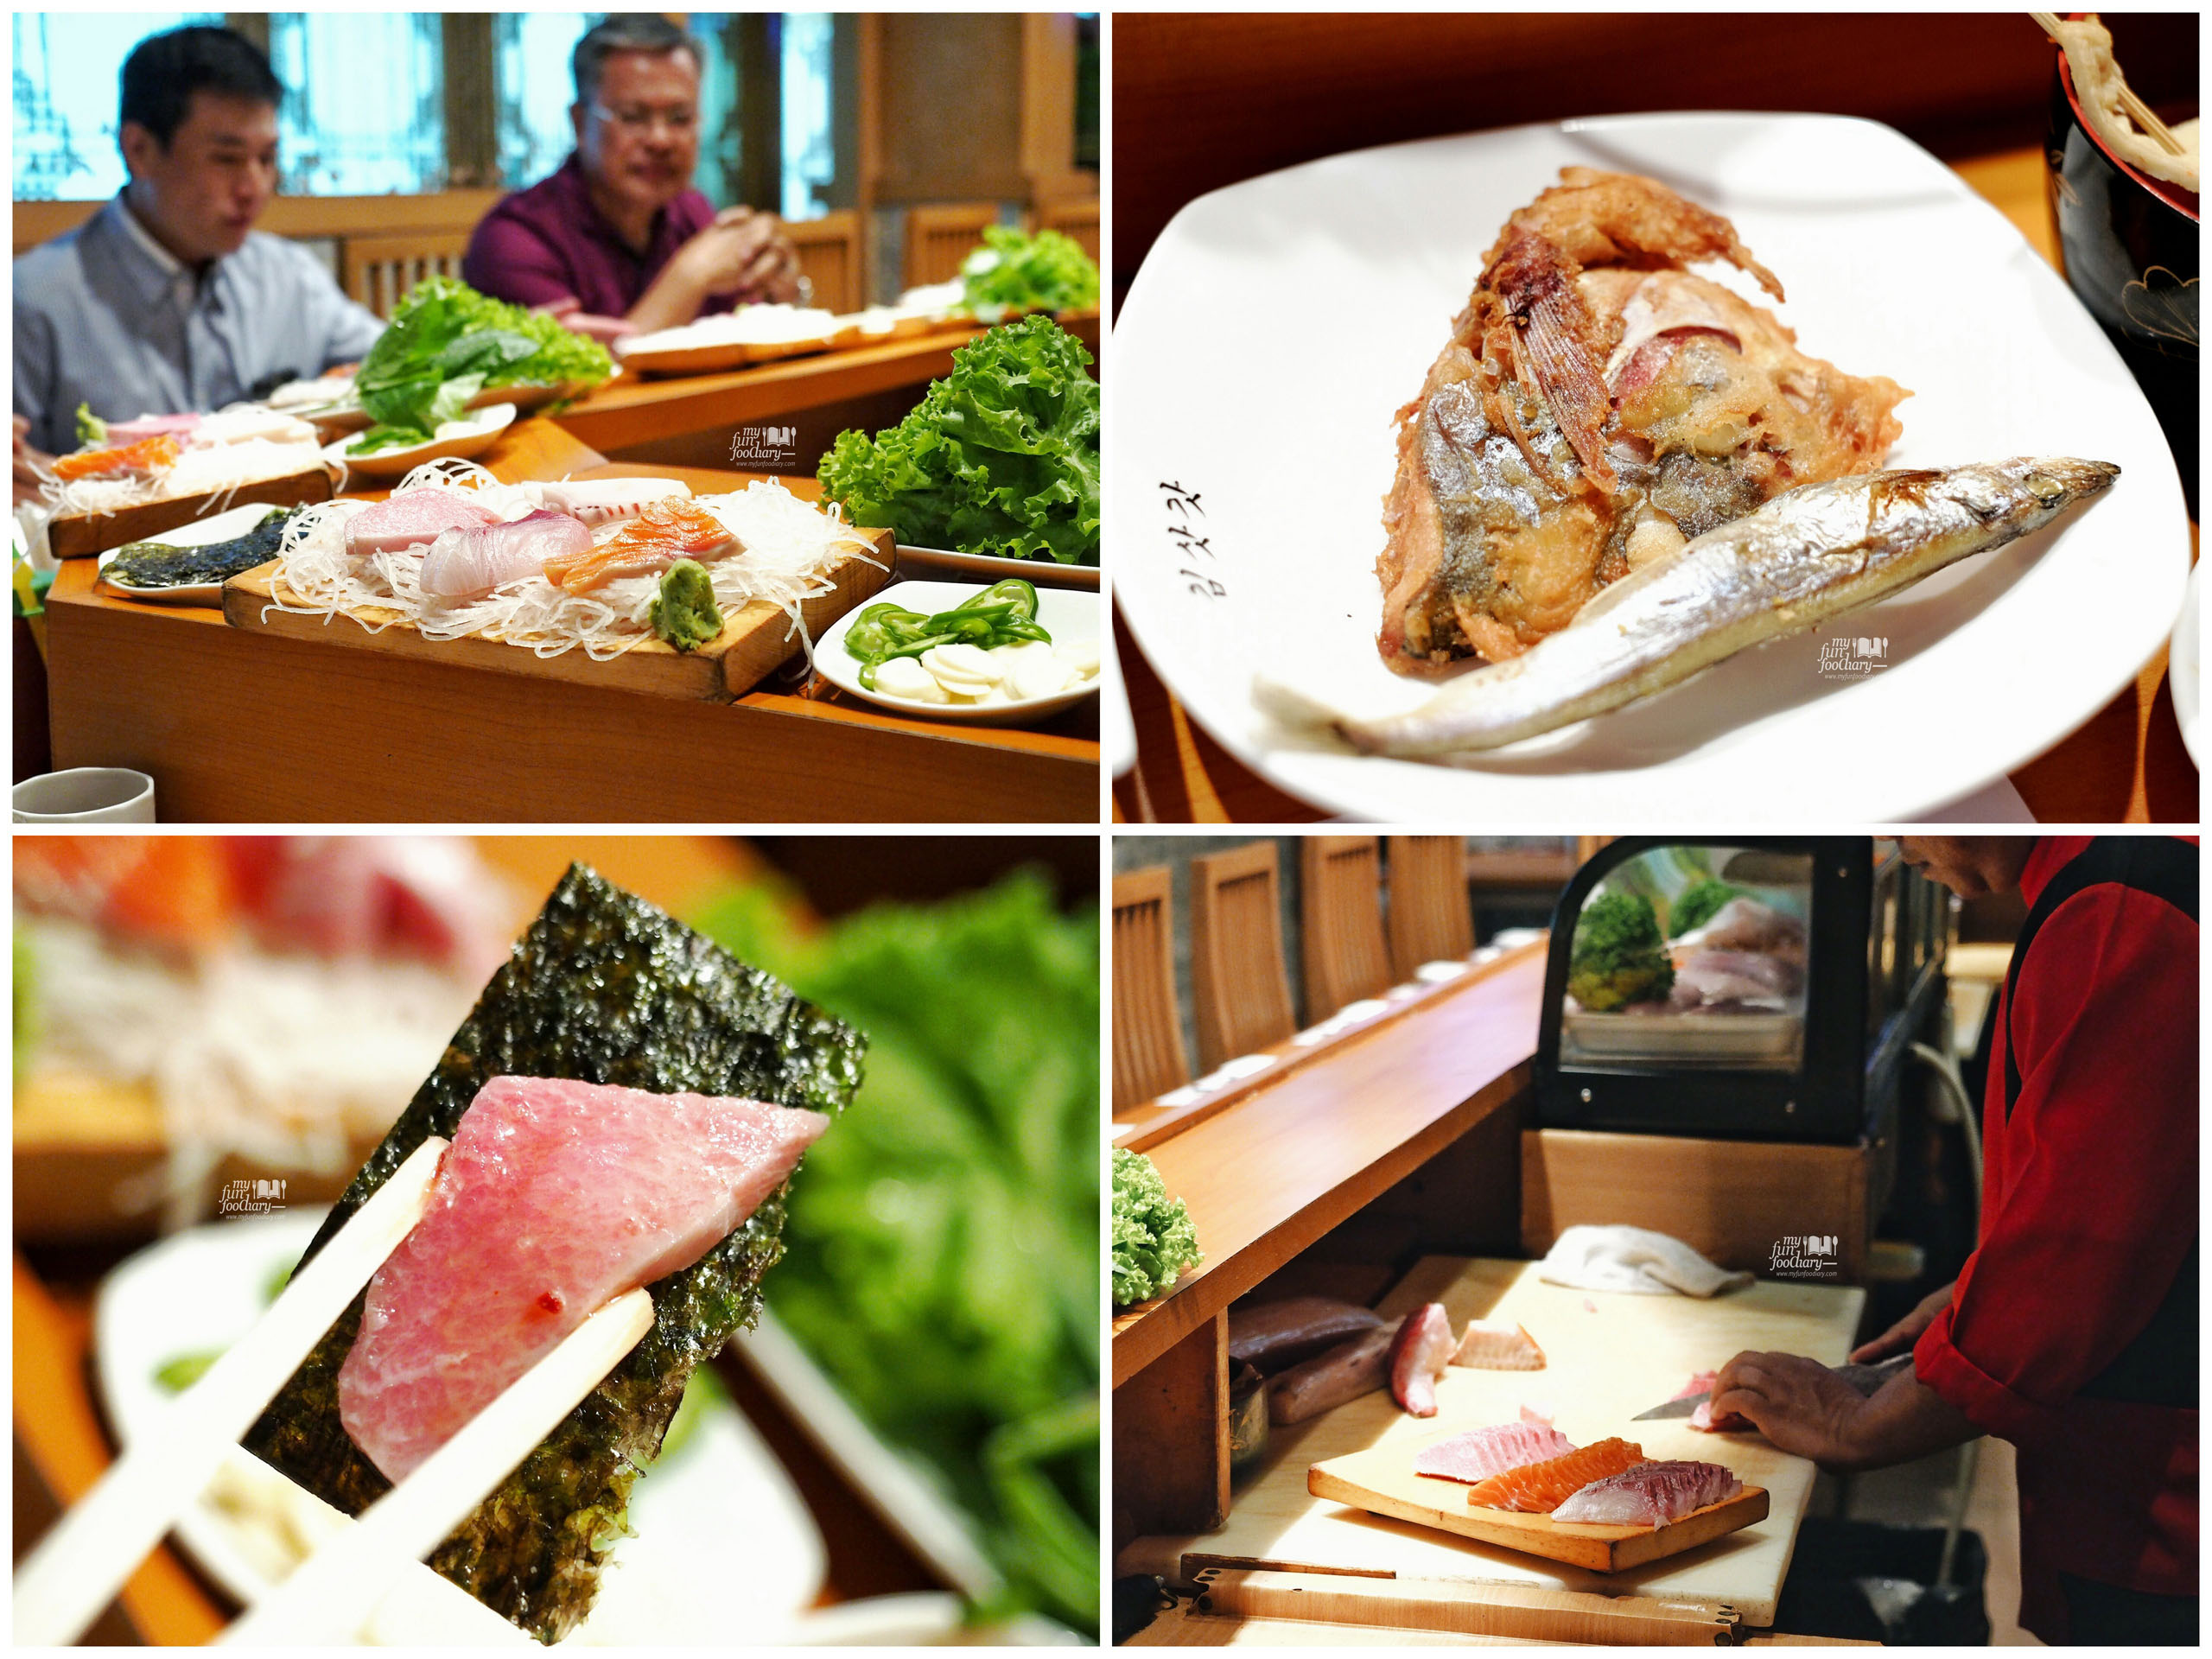 Unlimited Fresh Sashimi at Kim Sat Gat by Myfunfoodiary